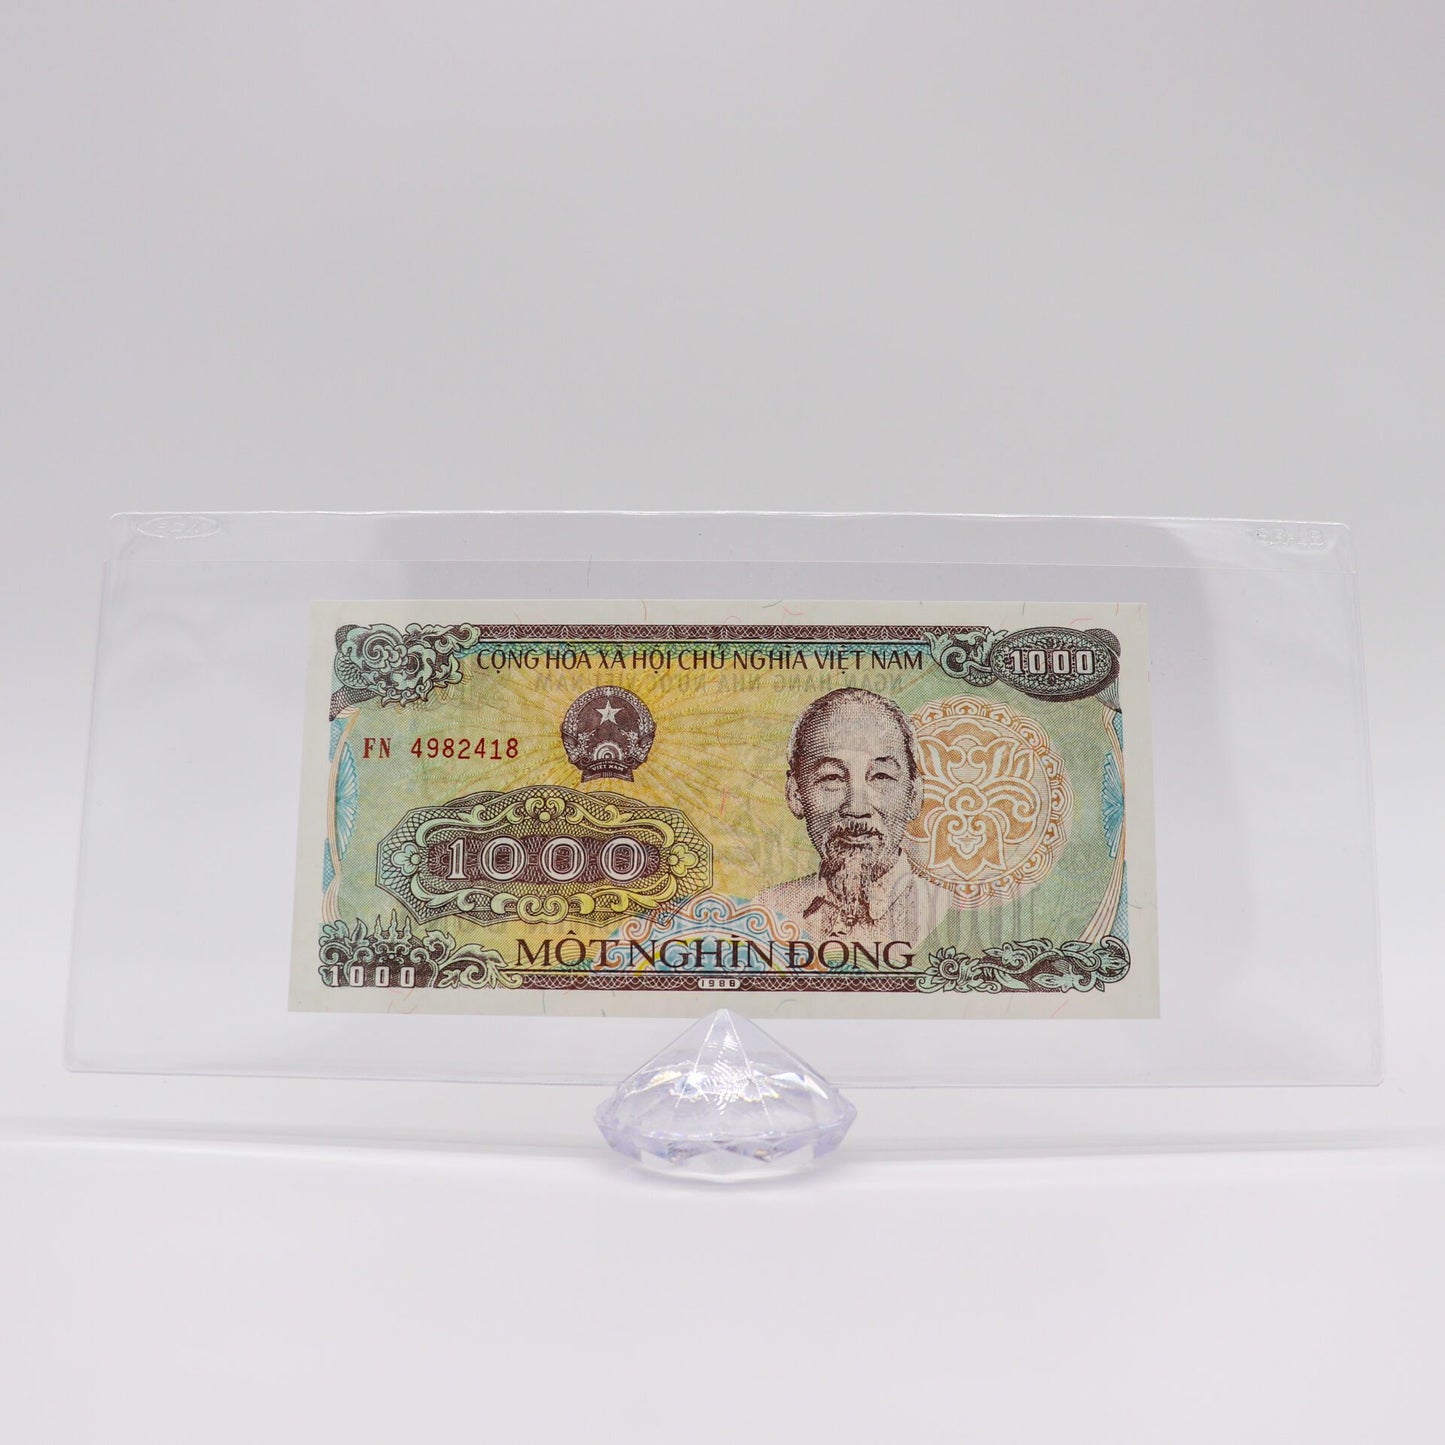 1988 Vietnamese 1000 VND Bank Note, Mint